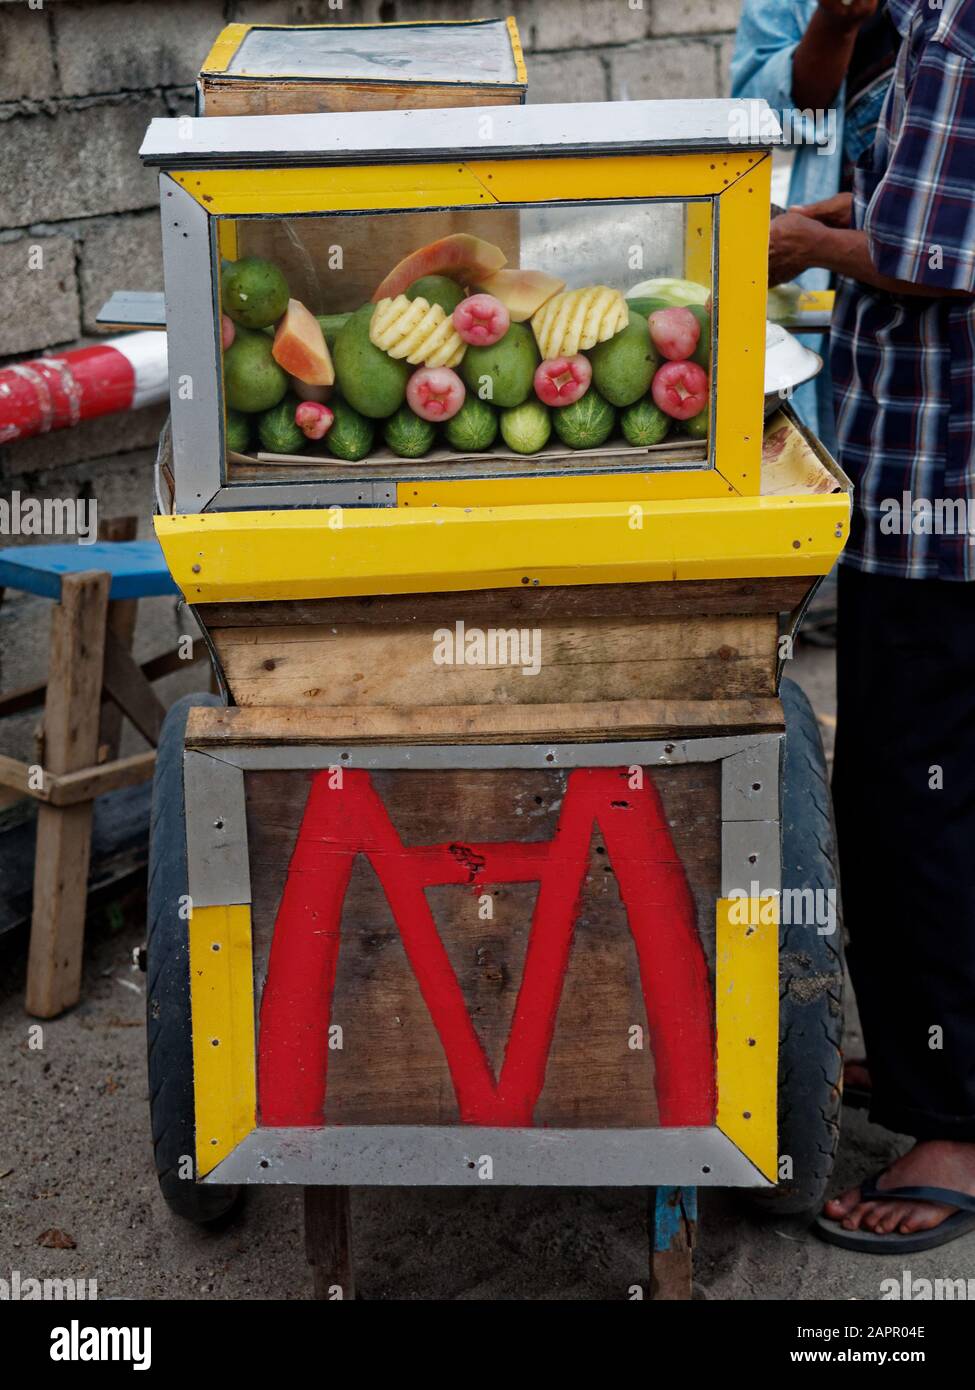 Sengiggi Strandverkäufer von Mango und rosenapfel, Lombok Insel, Indonesien, Asien Stockfoto